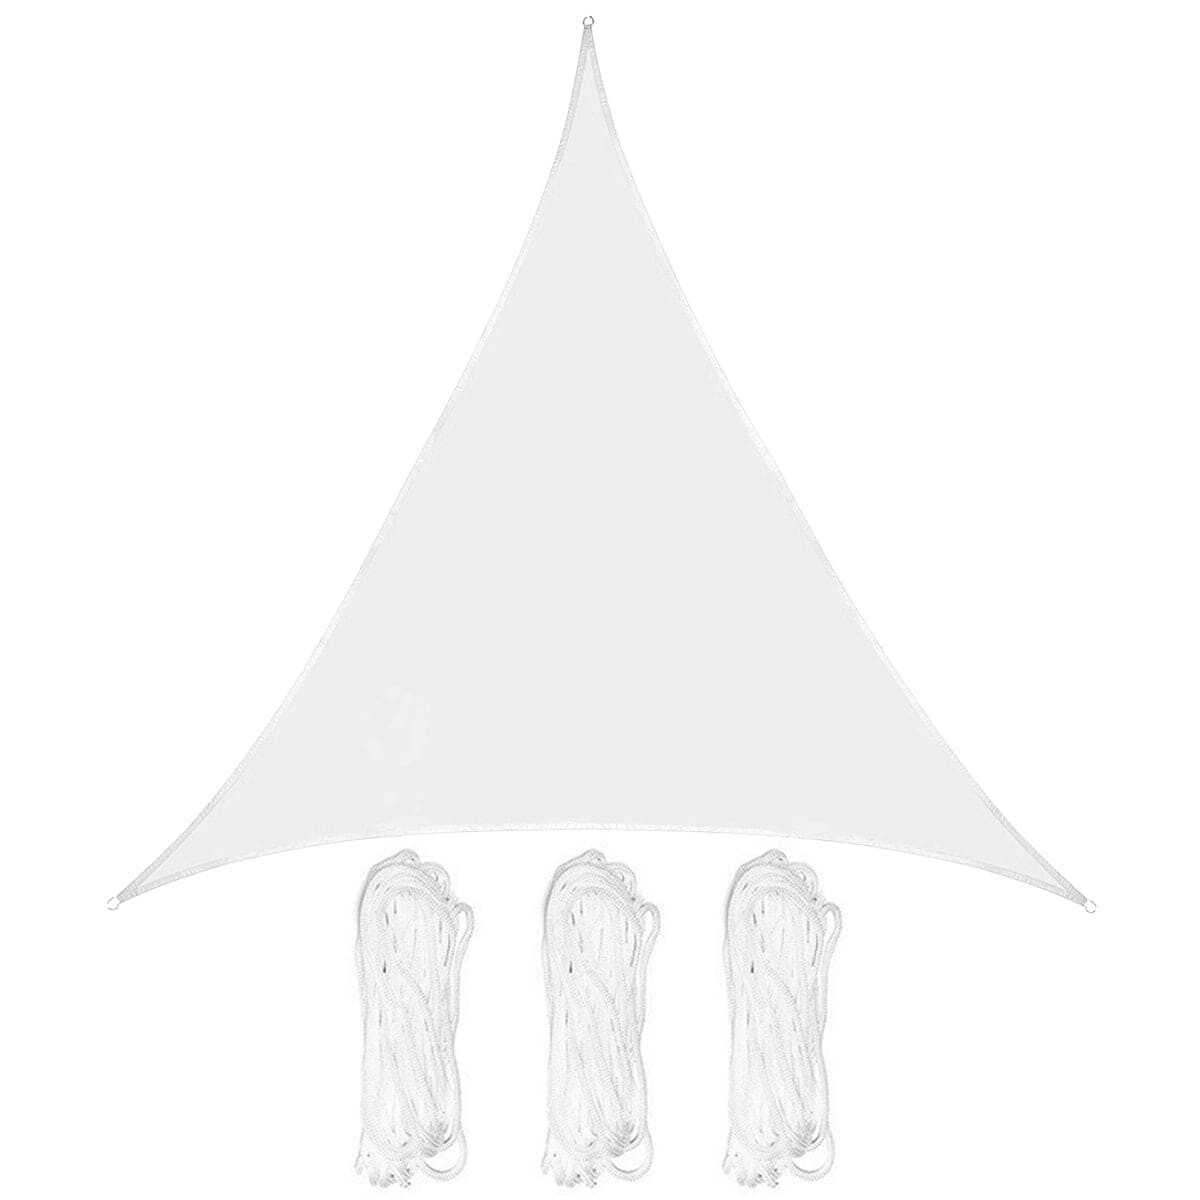 Lona Toldo Vela Triangular Filtro Uv 3,6m Sombra - Blanco 